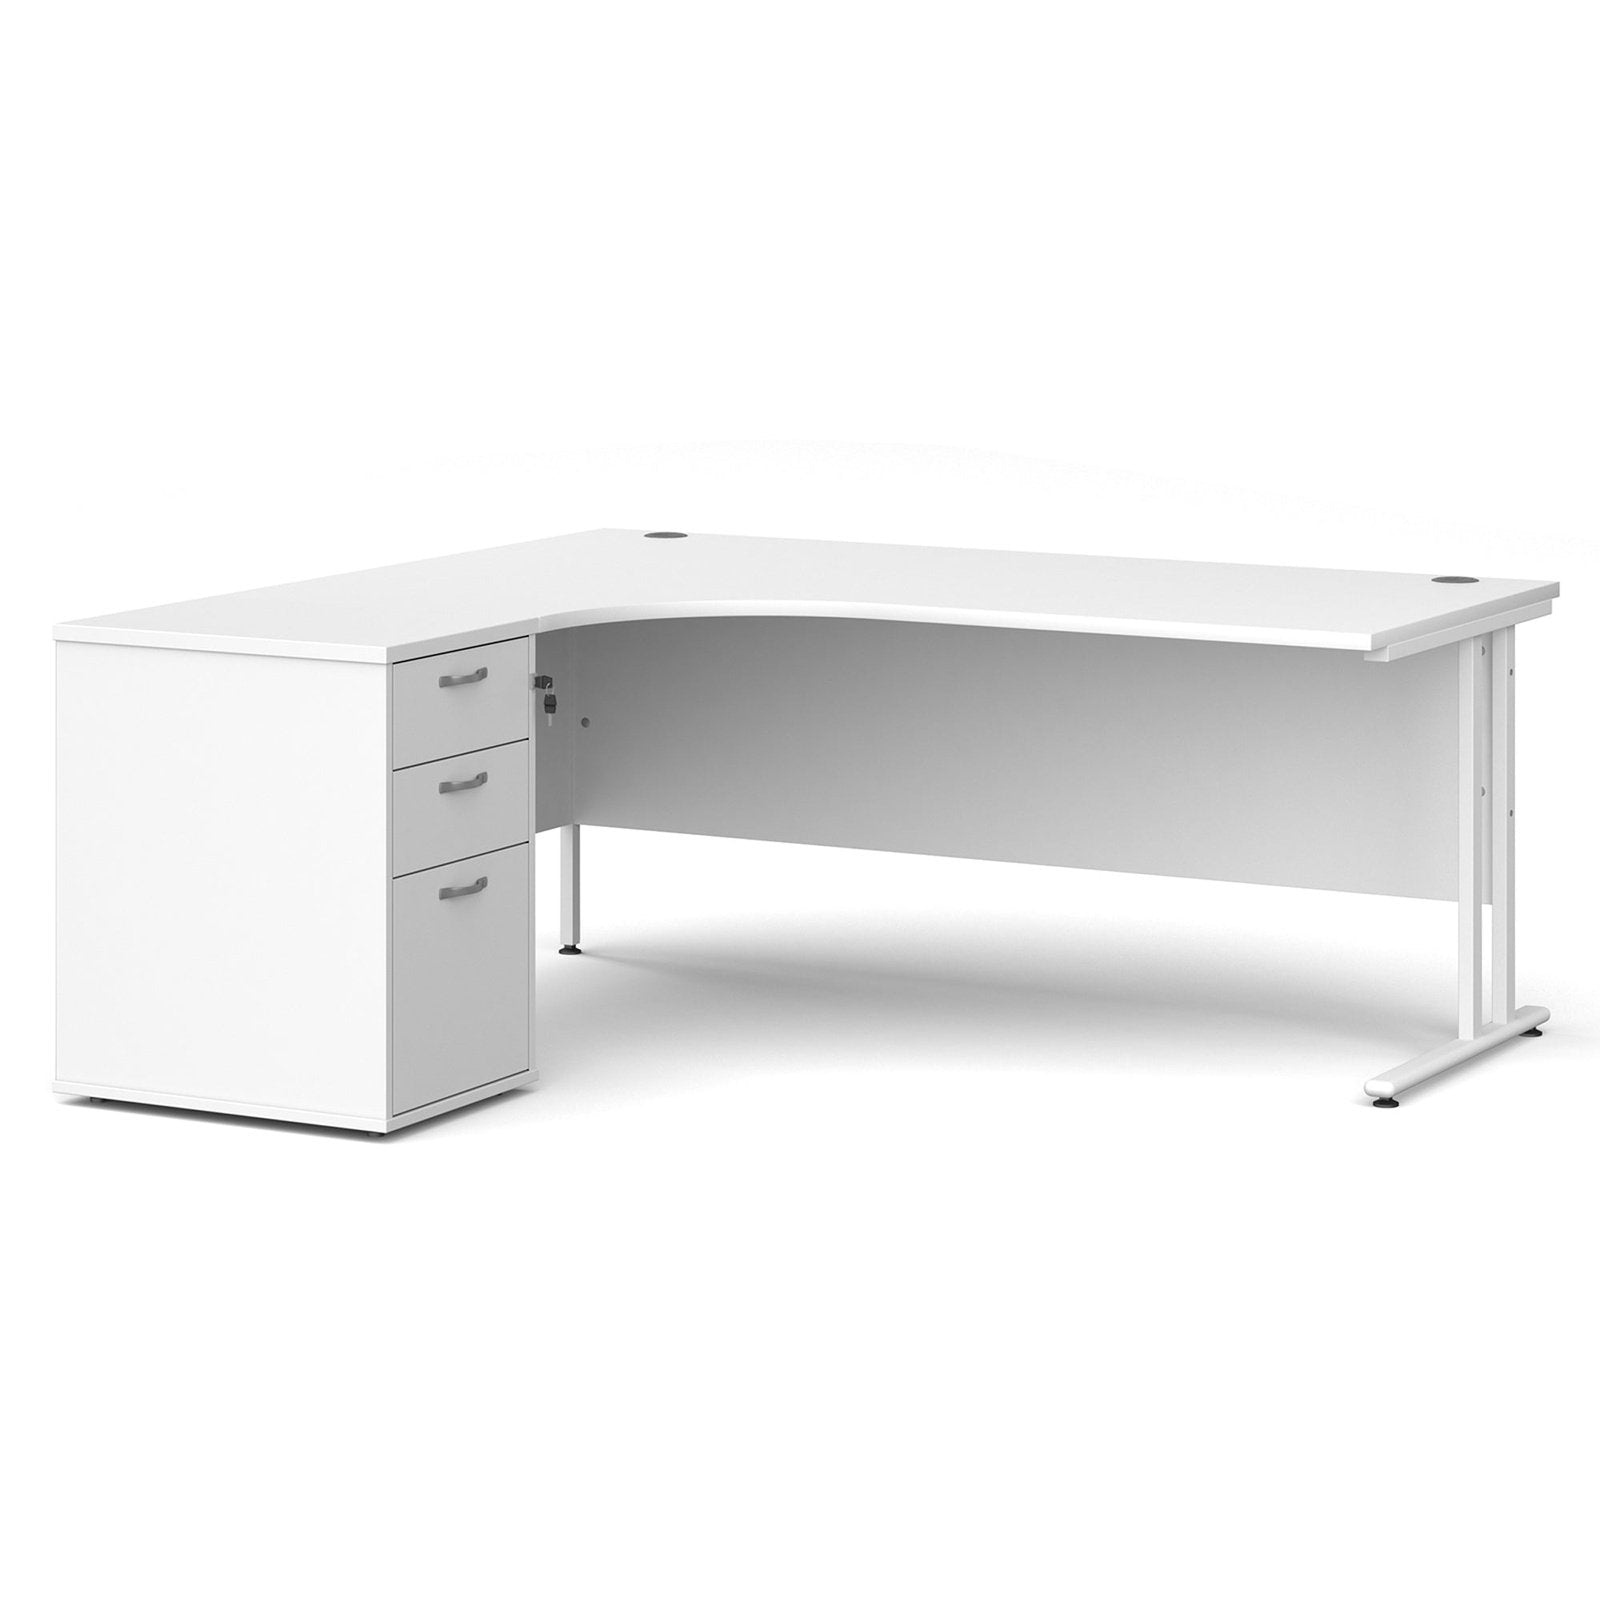 Maestro 25 left hand ergonomic with desk high pedestal - Office Products Online